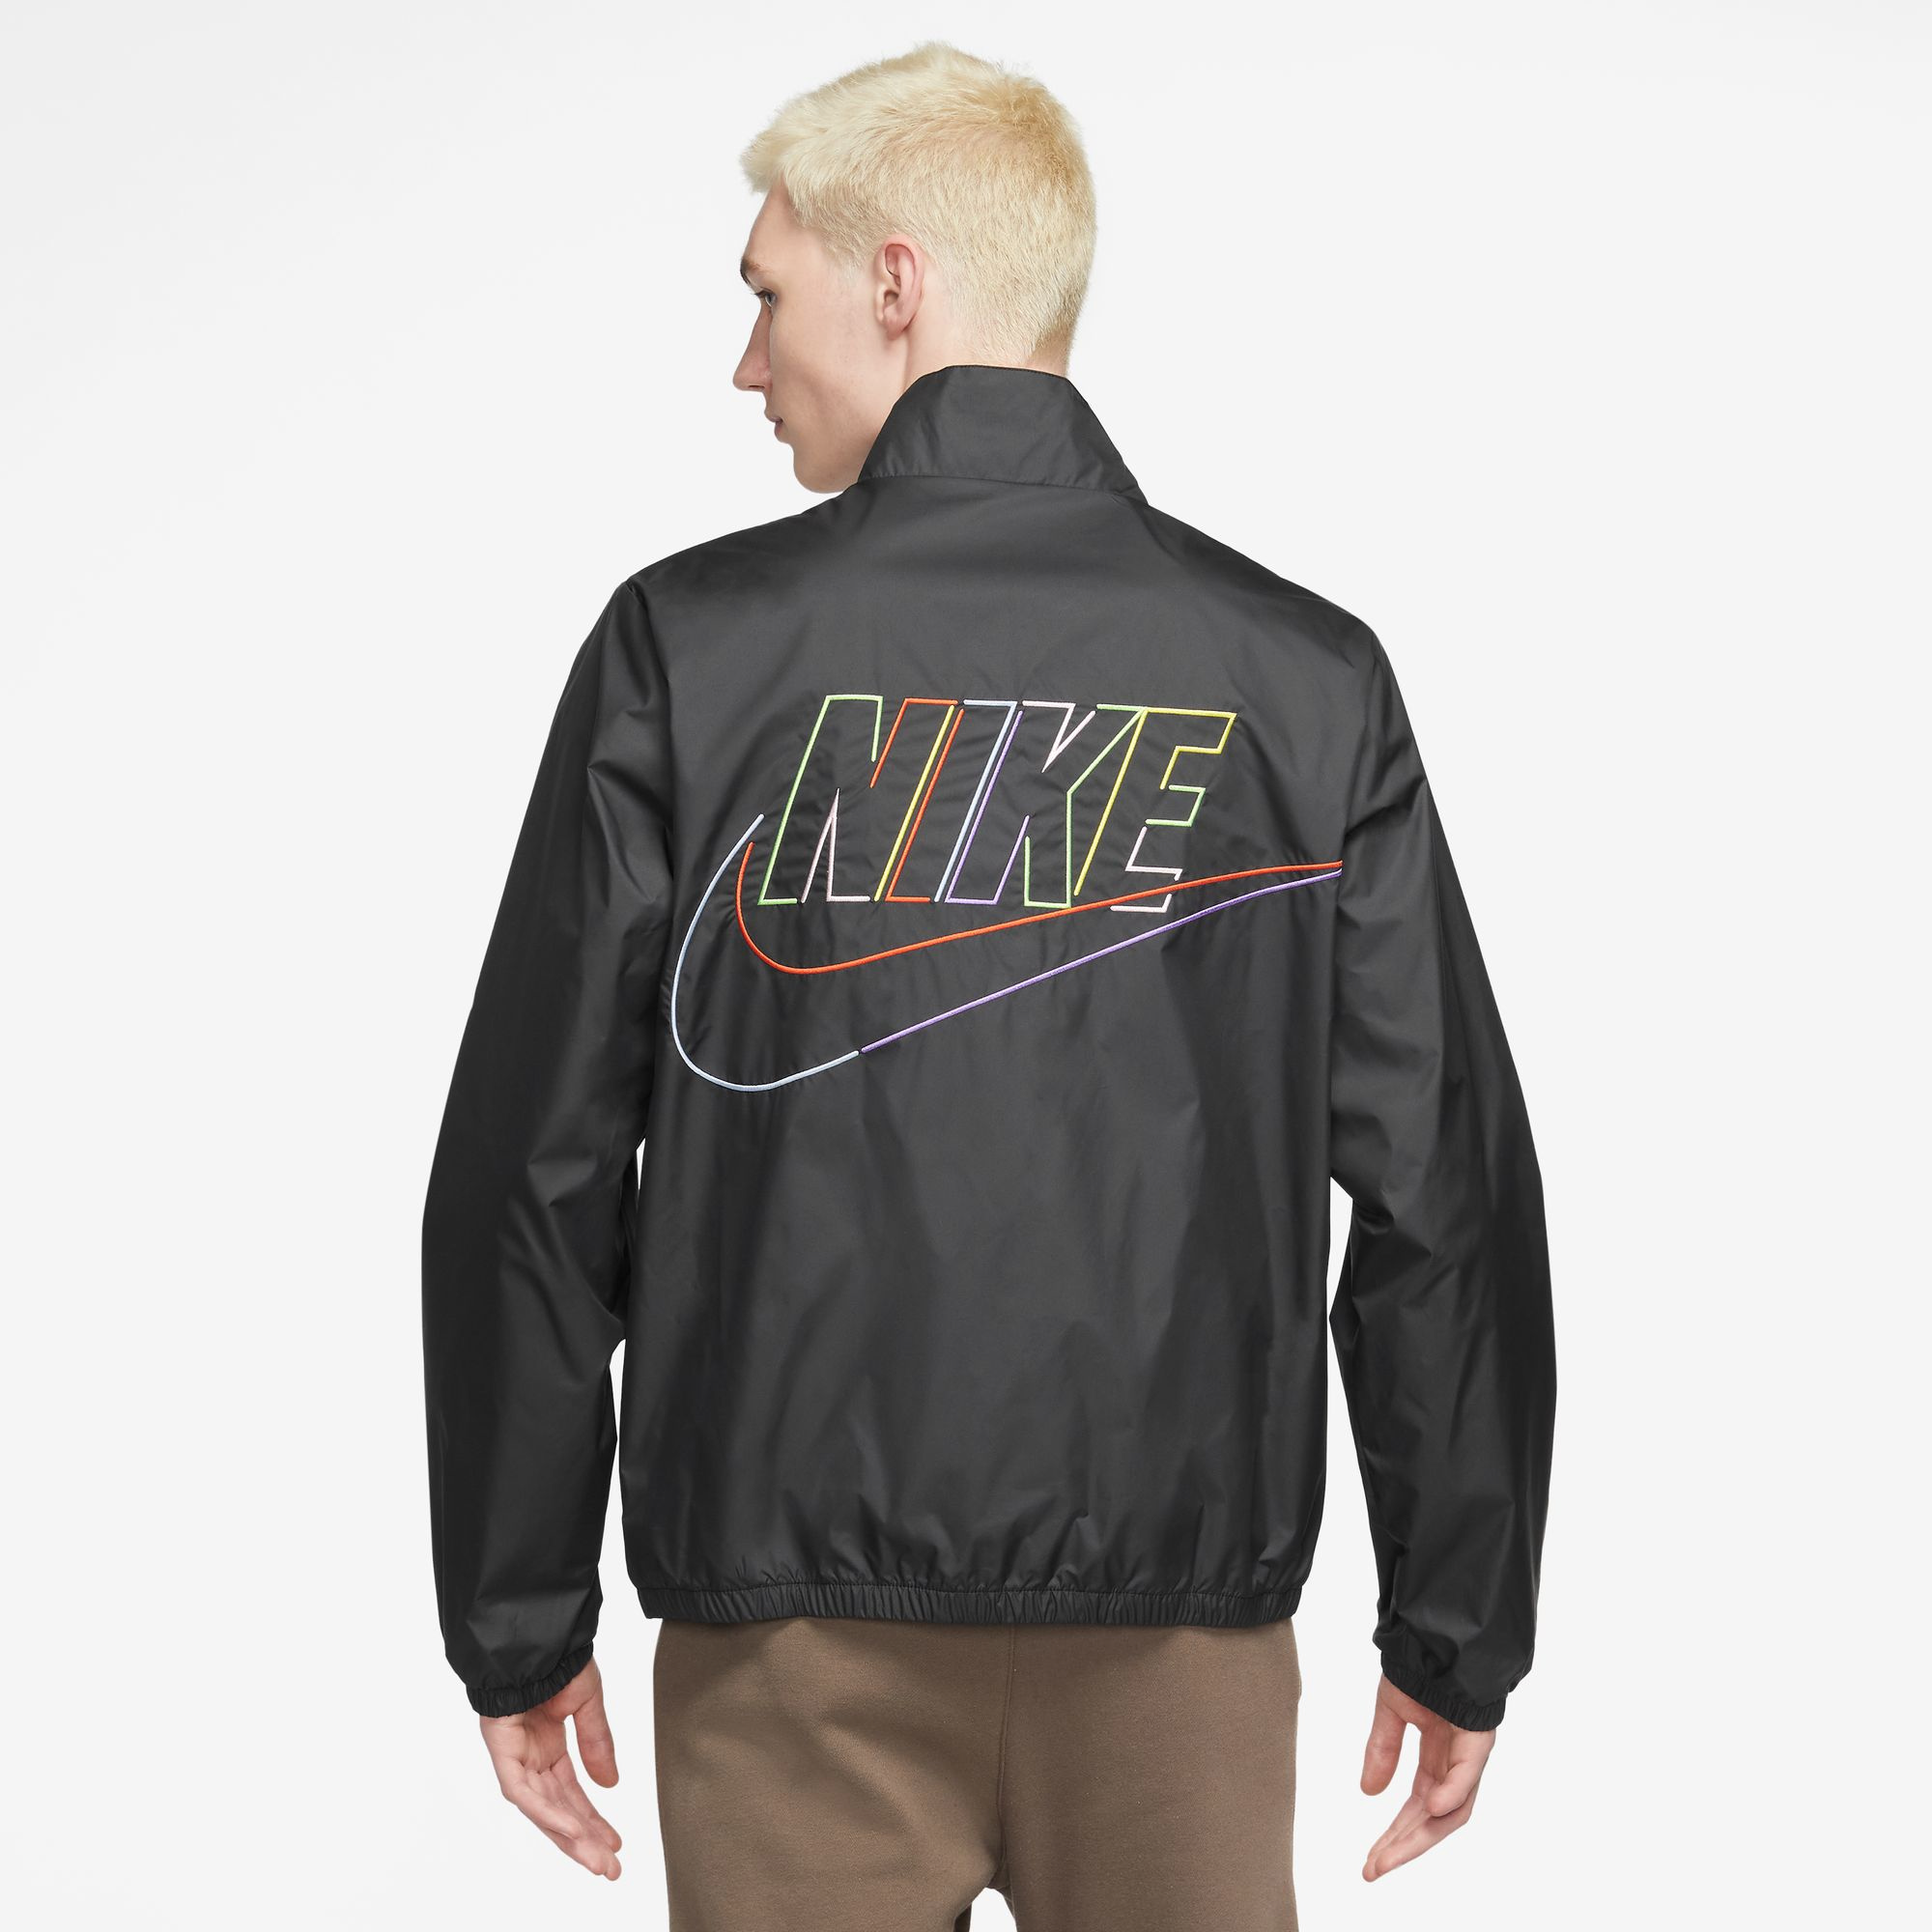 Nike Club Woven Jacket